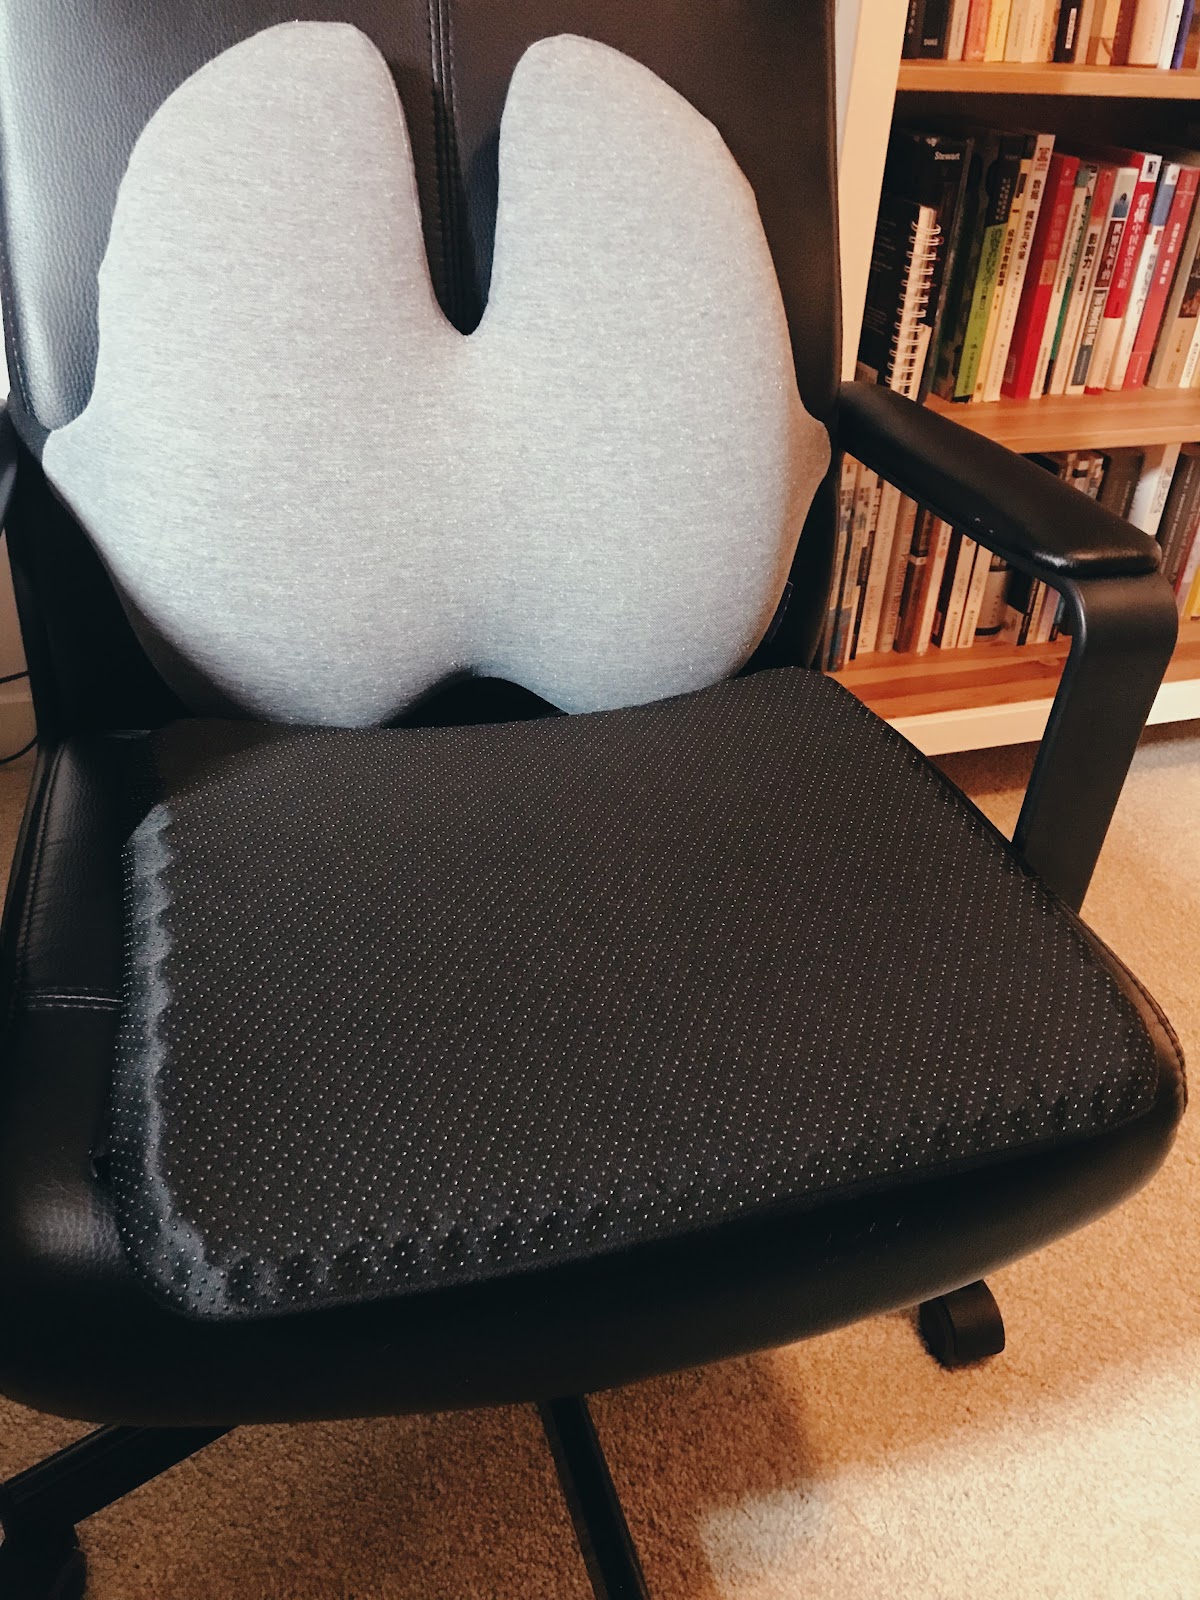 居家好物-办公室-坐垫-办公椅-amazon-Gel-Seat-Cushion-office-chair